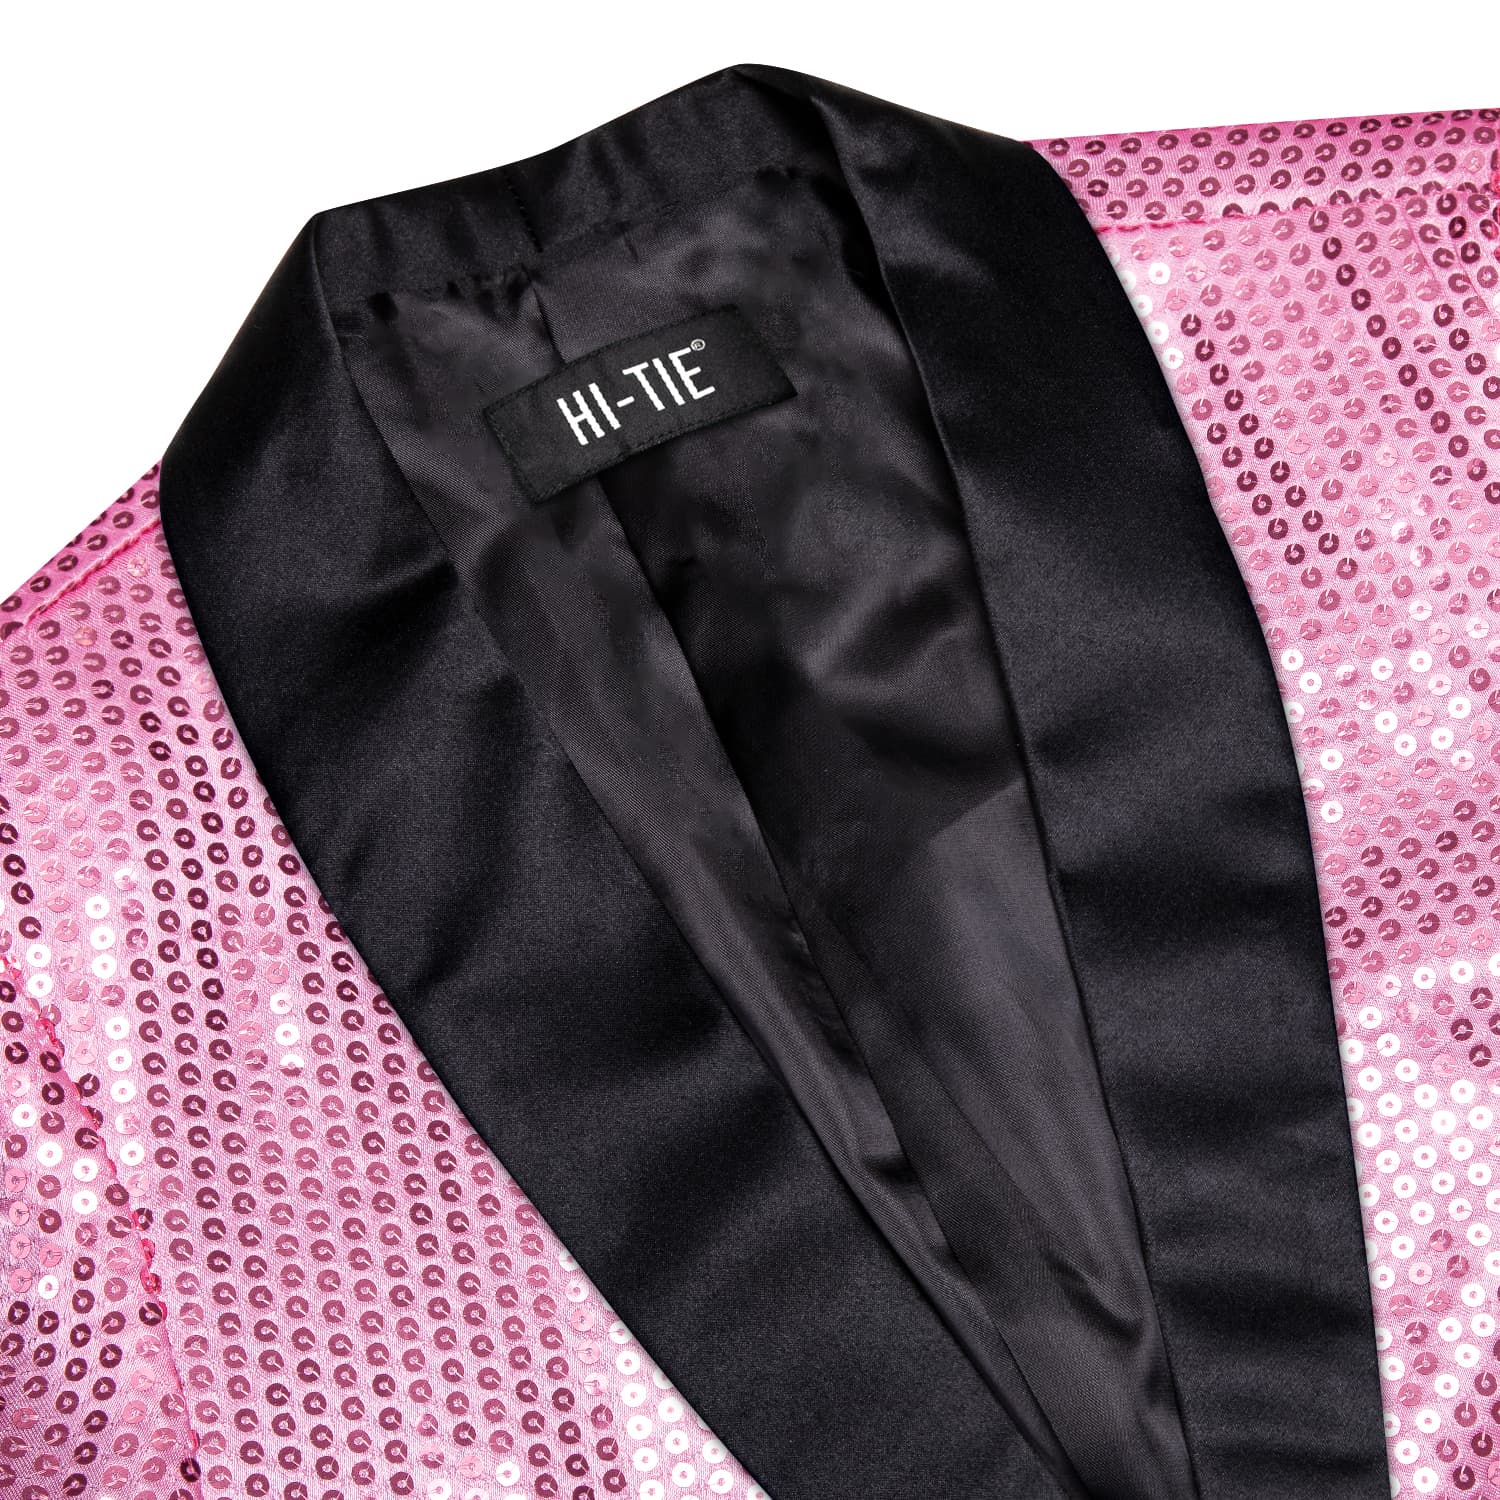  Sequin Blazer Black Shawl Collar Pink Solid Suit Tie Set